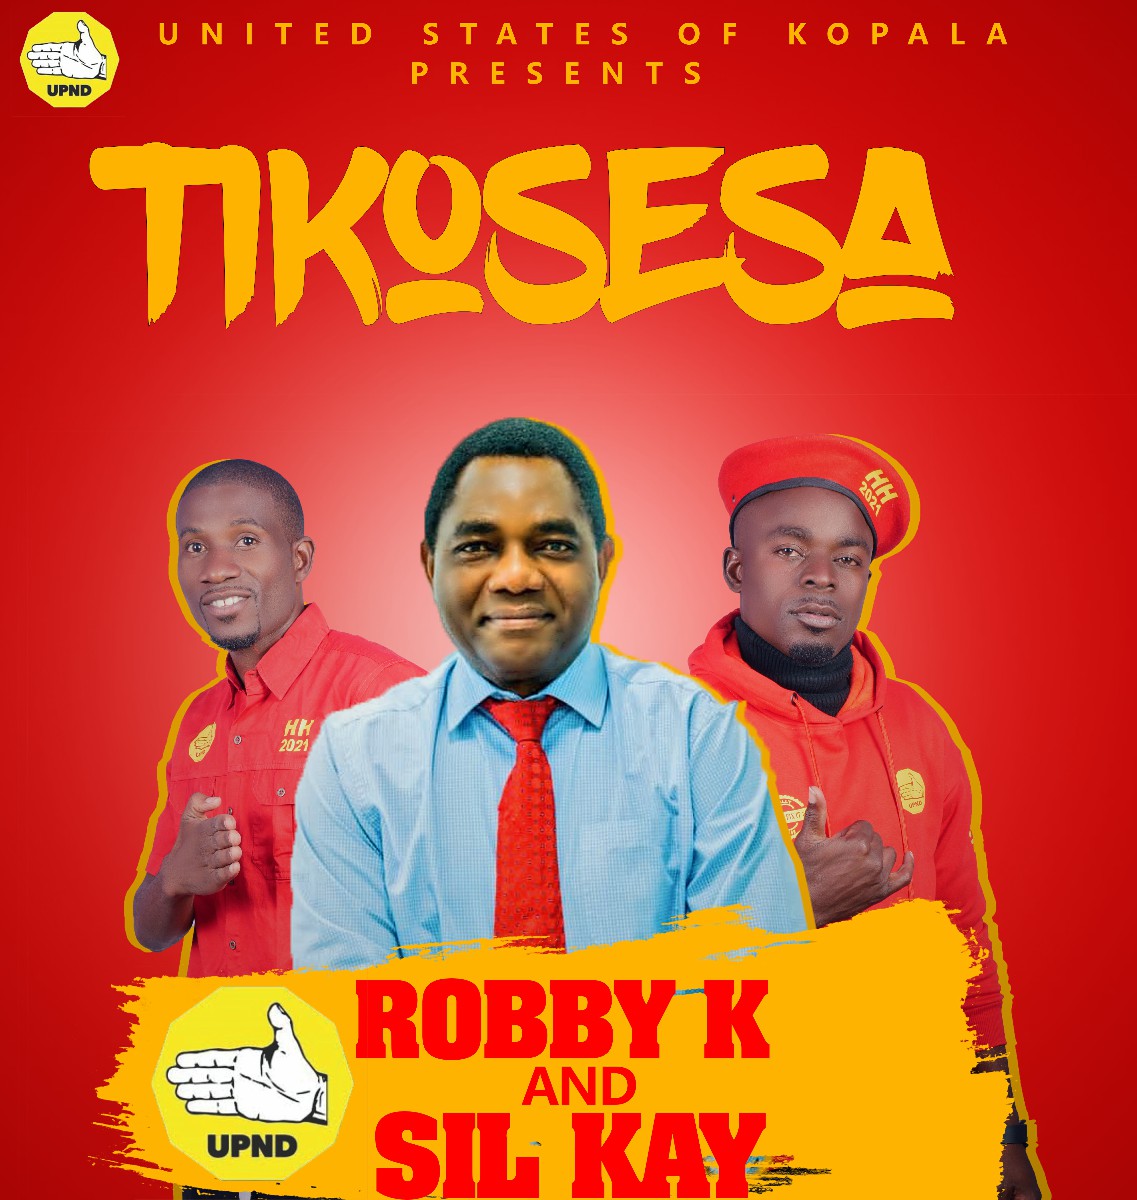 Robby K & Sil Kay - Tiikosesa (UPND Campaign Song)